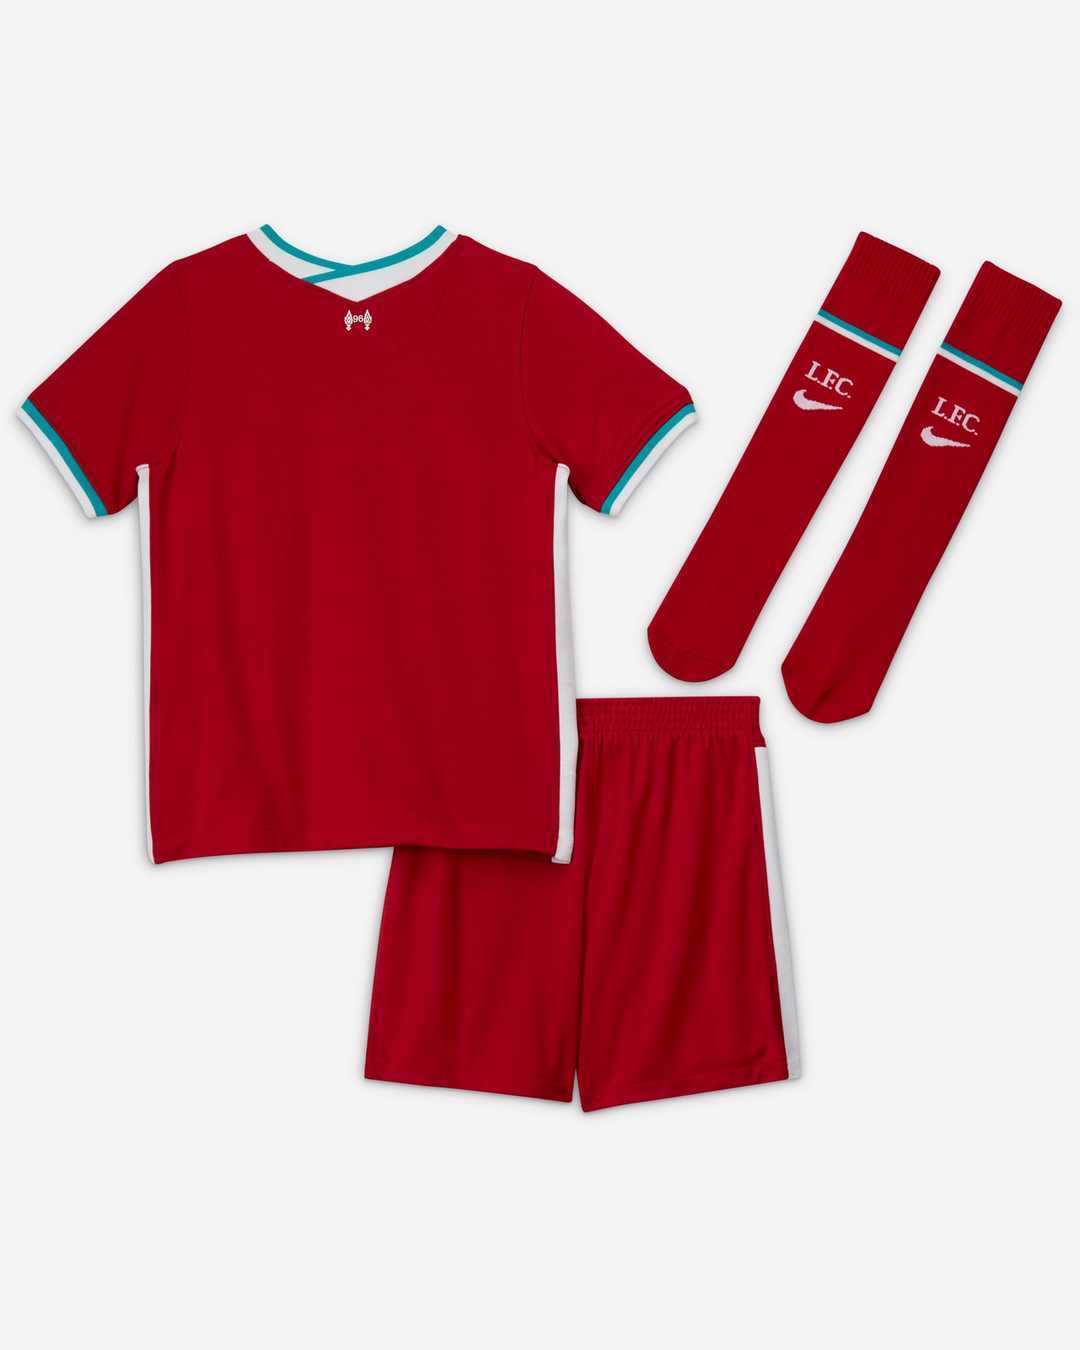 2020/21 Liverpool Home Kids Soccer Kit (Jersey + Shorts + Socks)